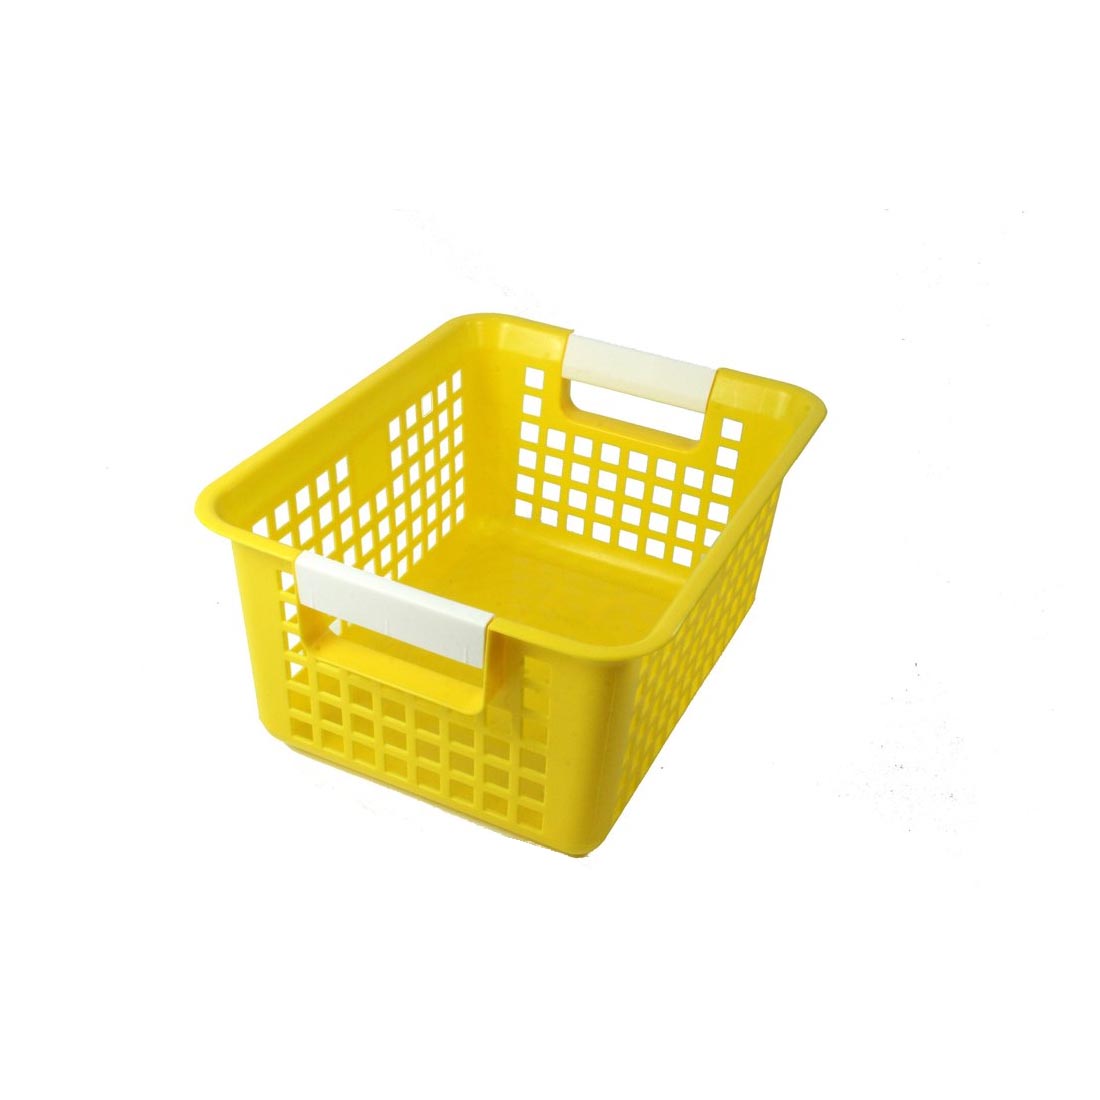 Romanoff Products Yellow Book Basket